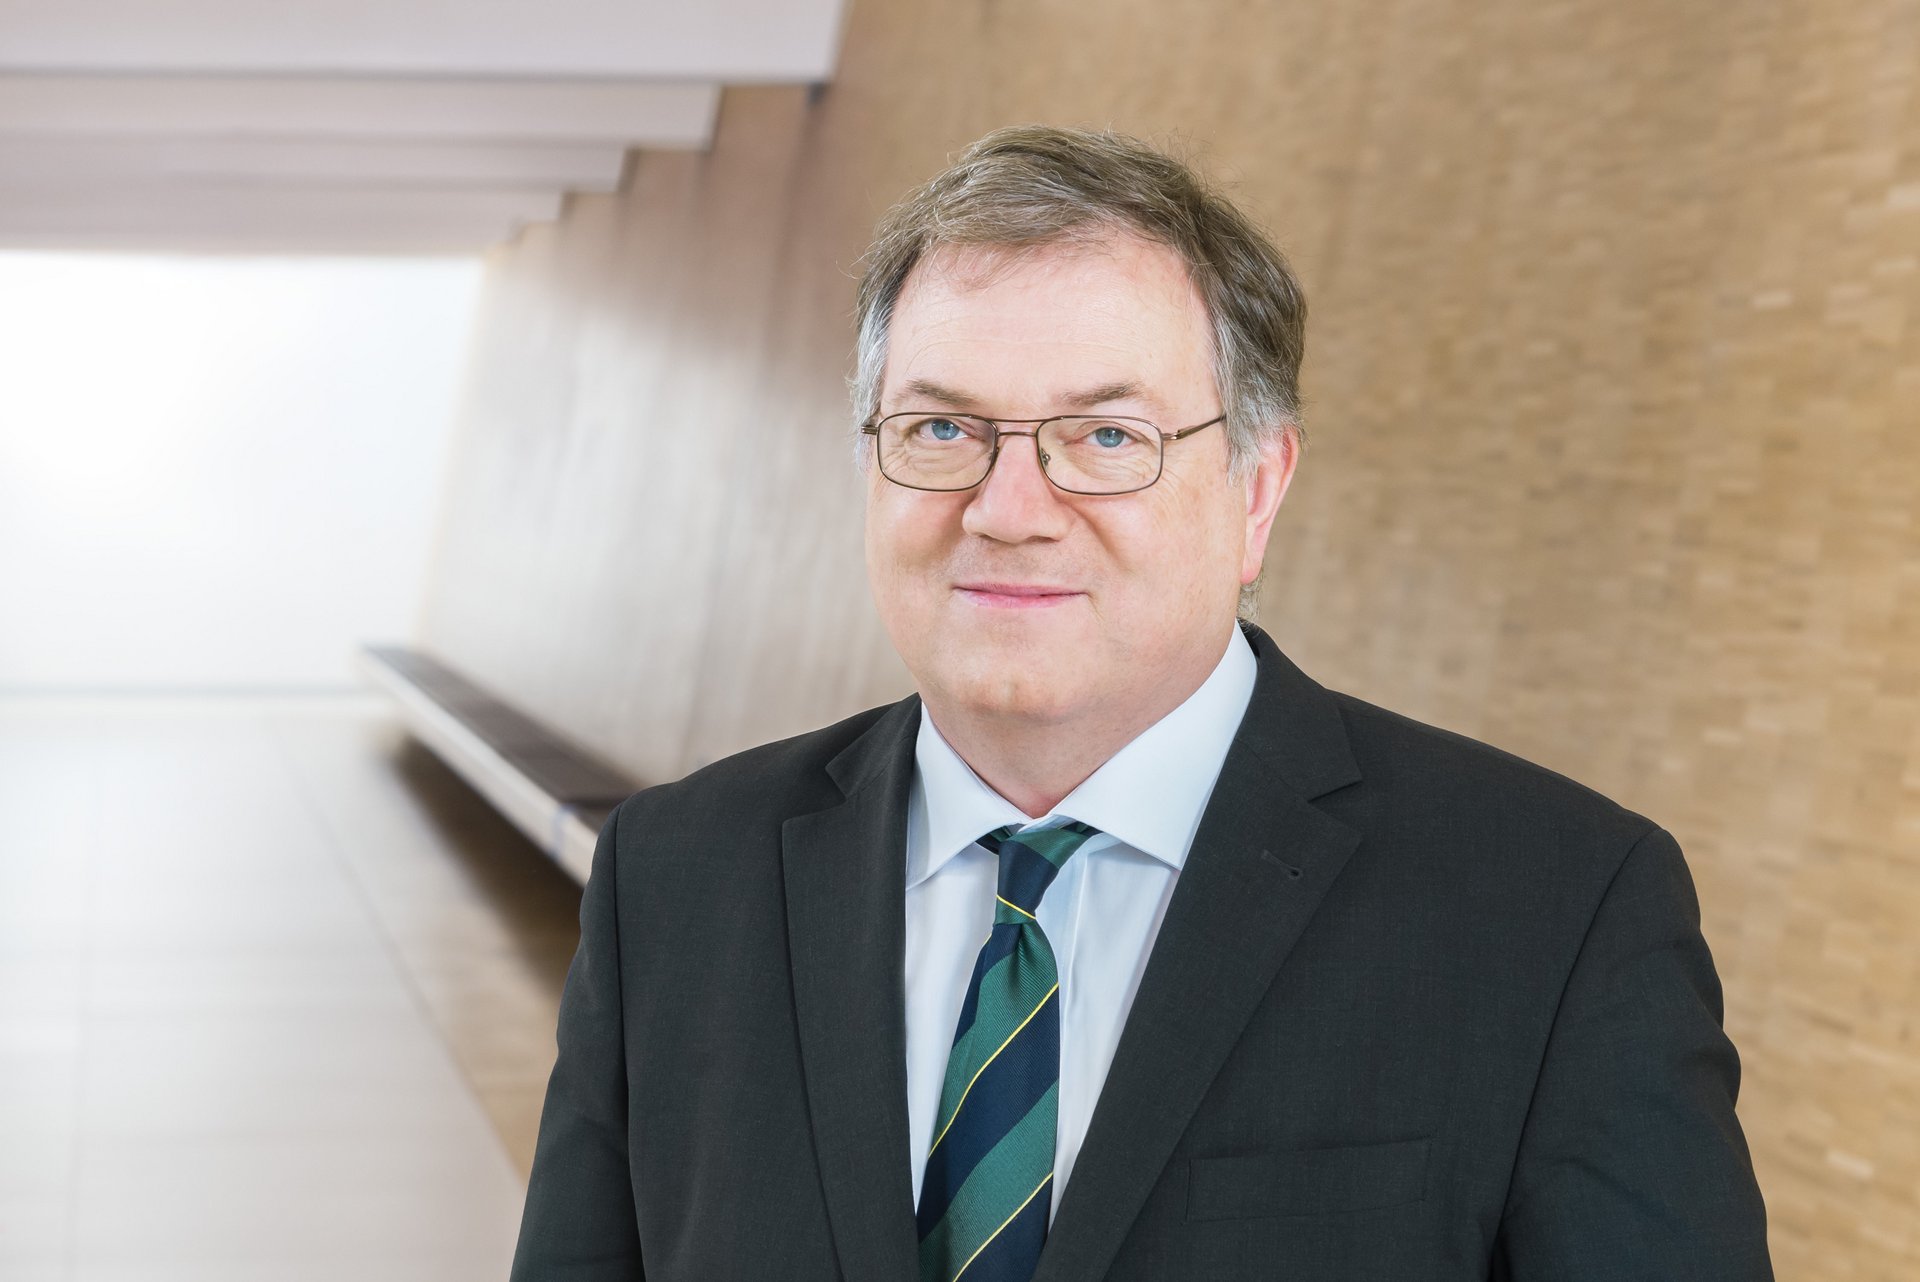 Univ-Prof. Dr. med. Frank Ulrich Müller, Dekan der Medizinischen Fakultät